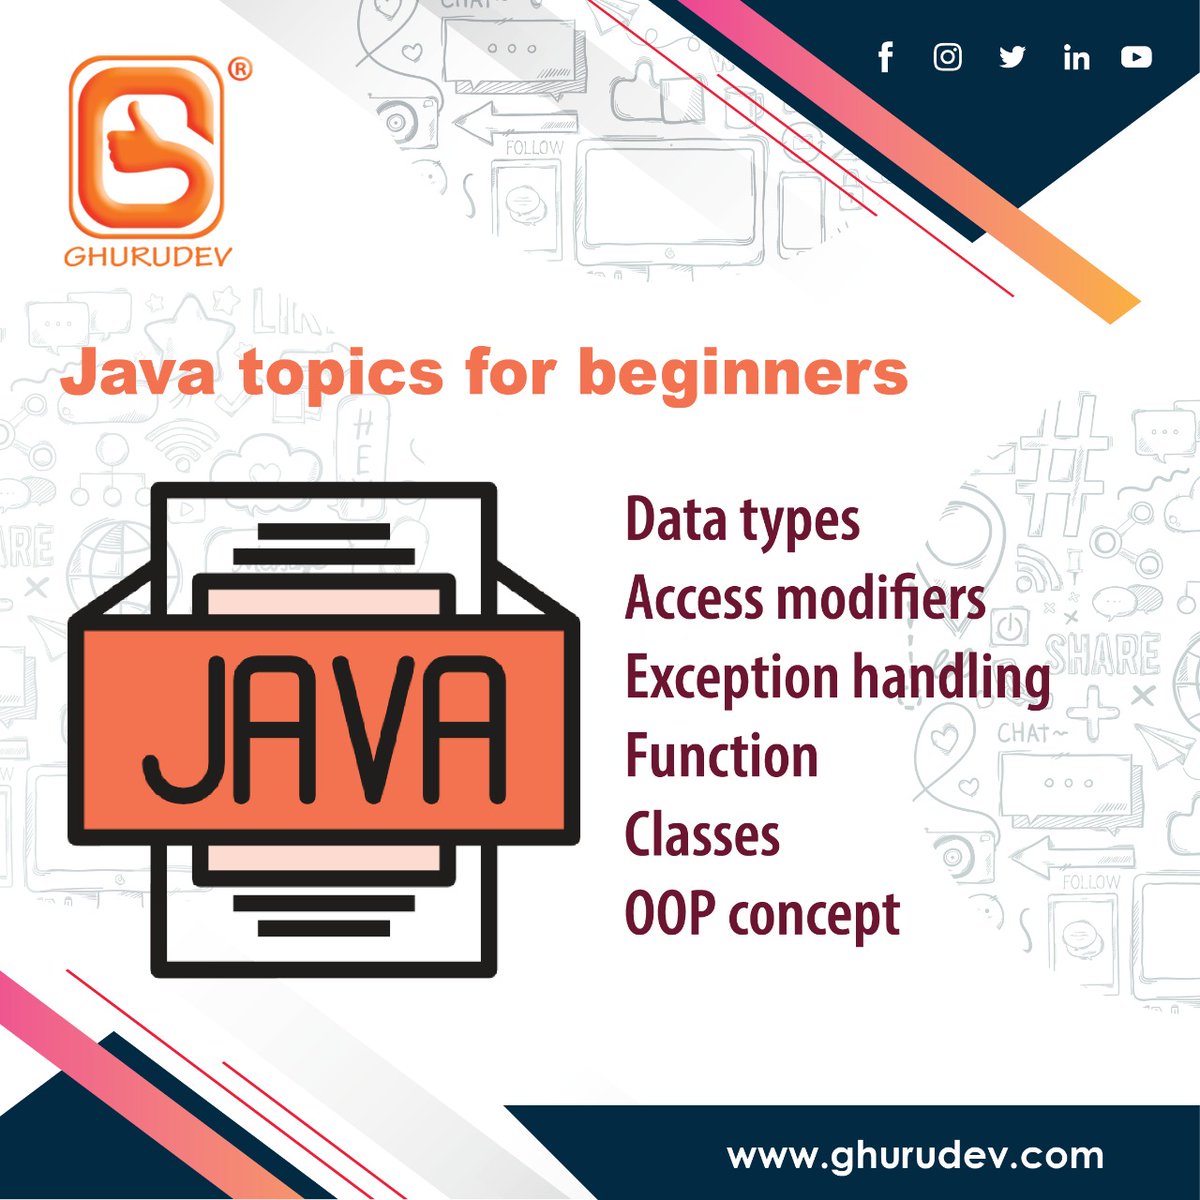 #ghurudeveducation #java #datatype #accessmodifiers #exceptionhandling #function #classes #opp